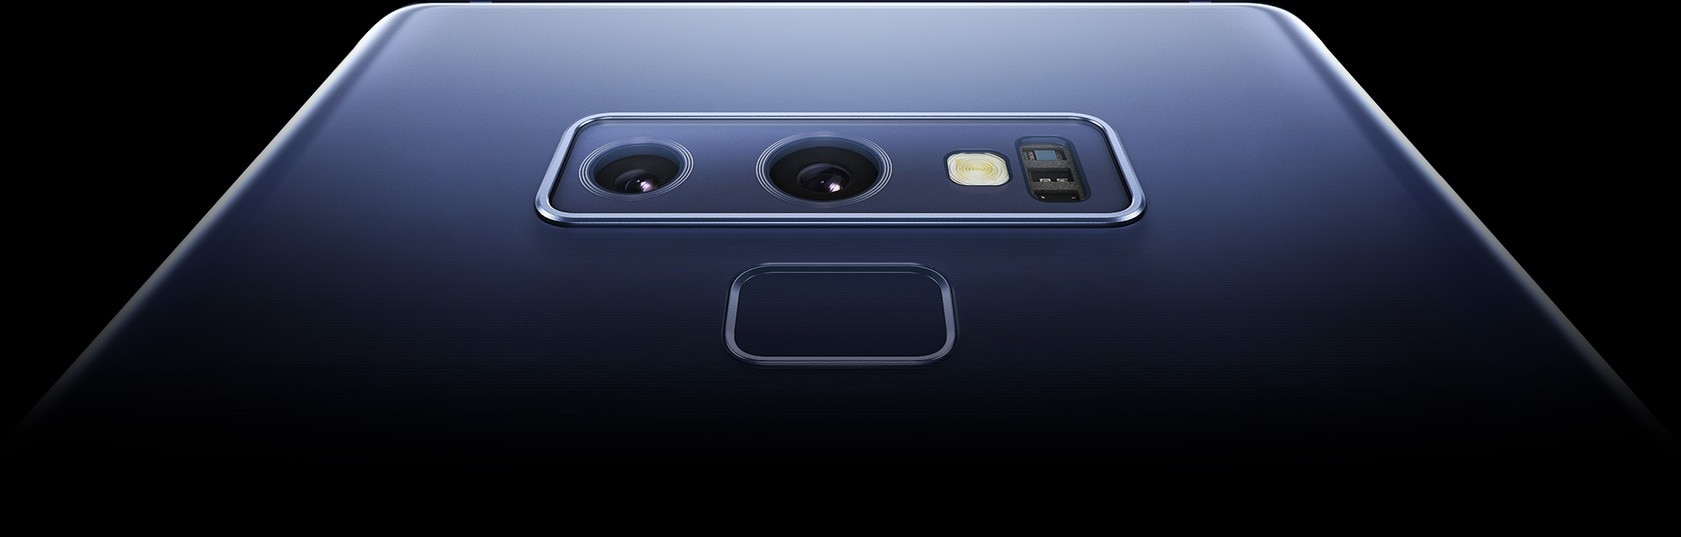 Samsung Galaxy Note 9 Camera